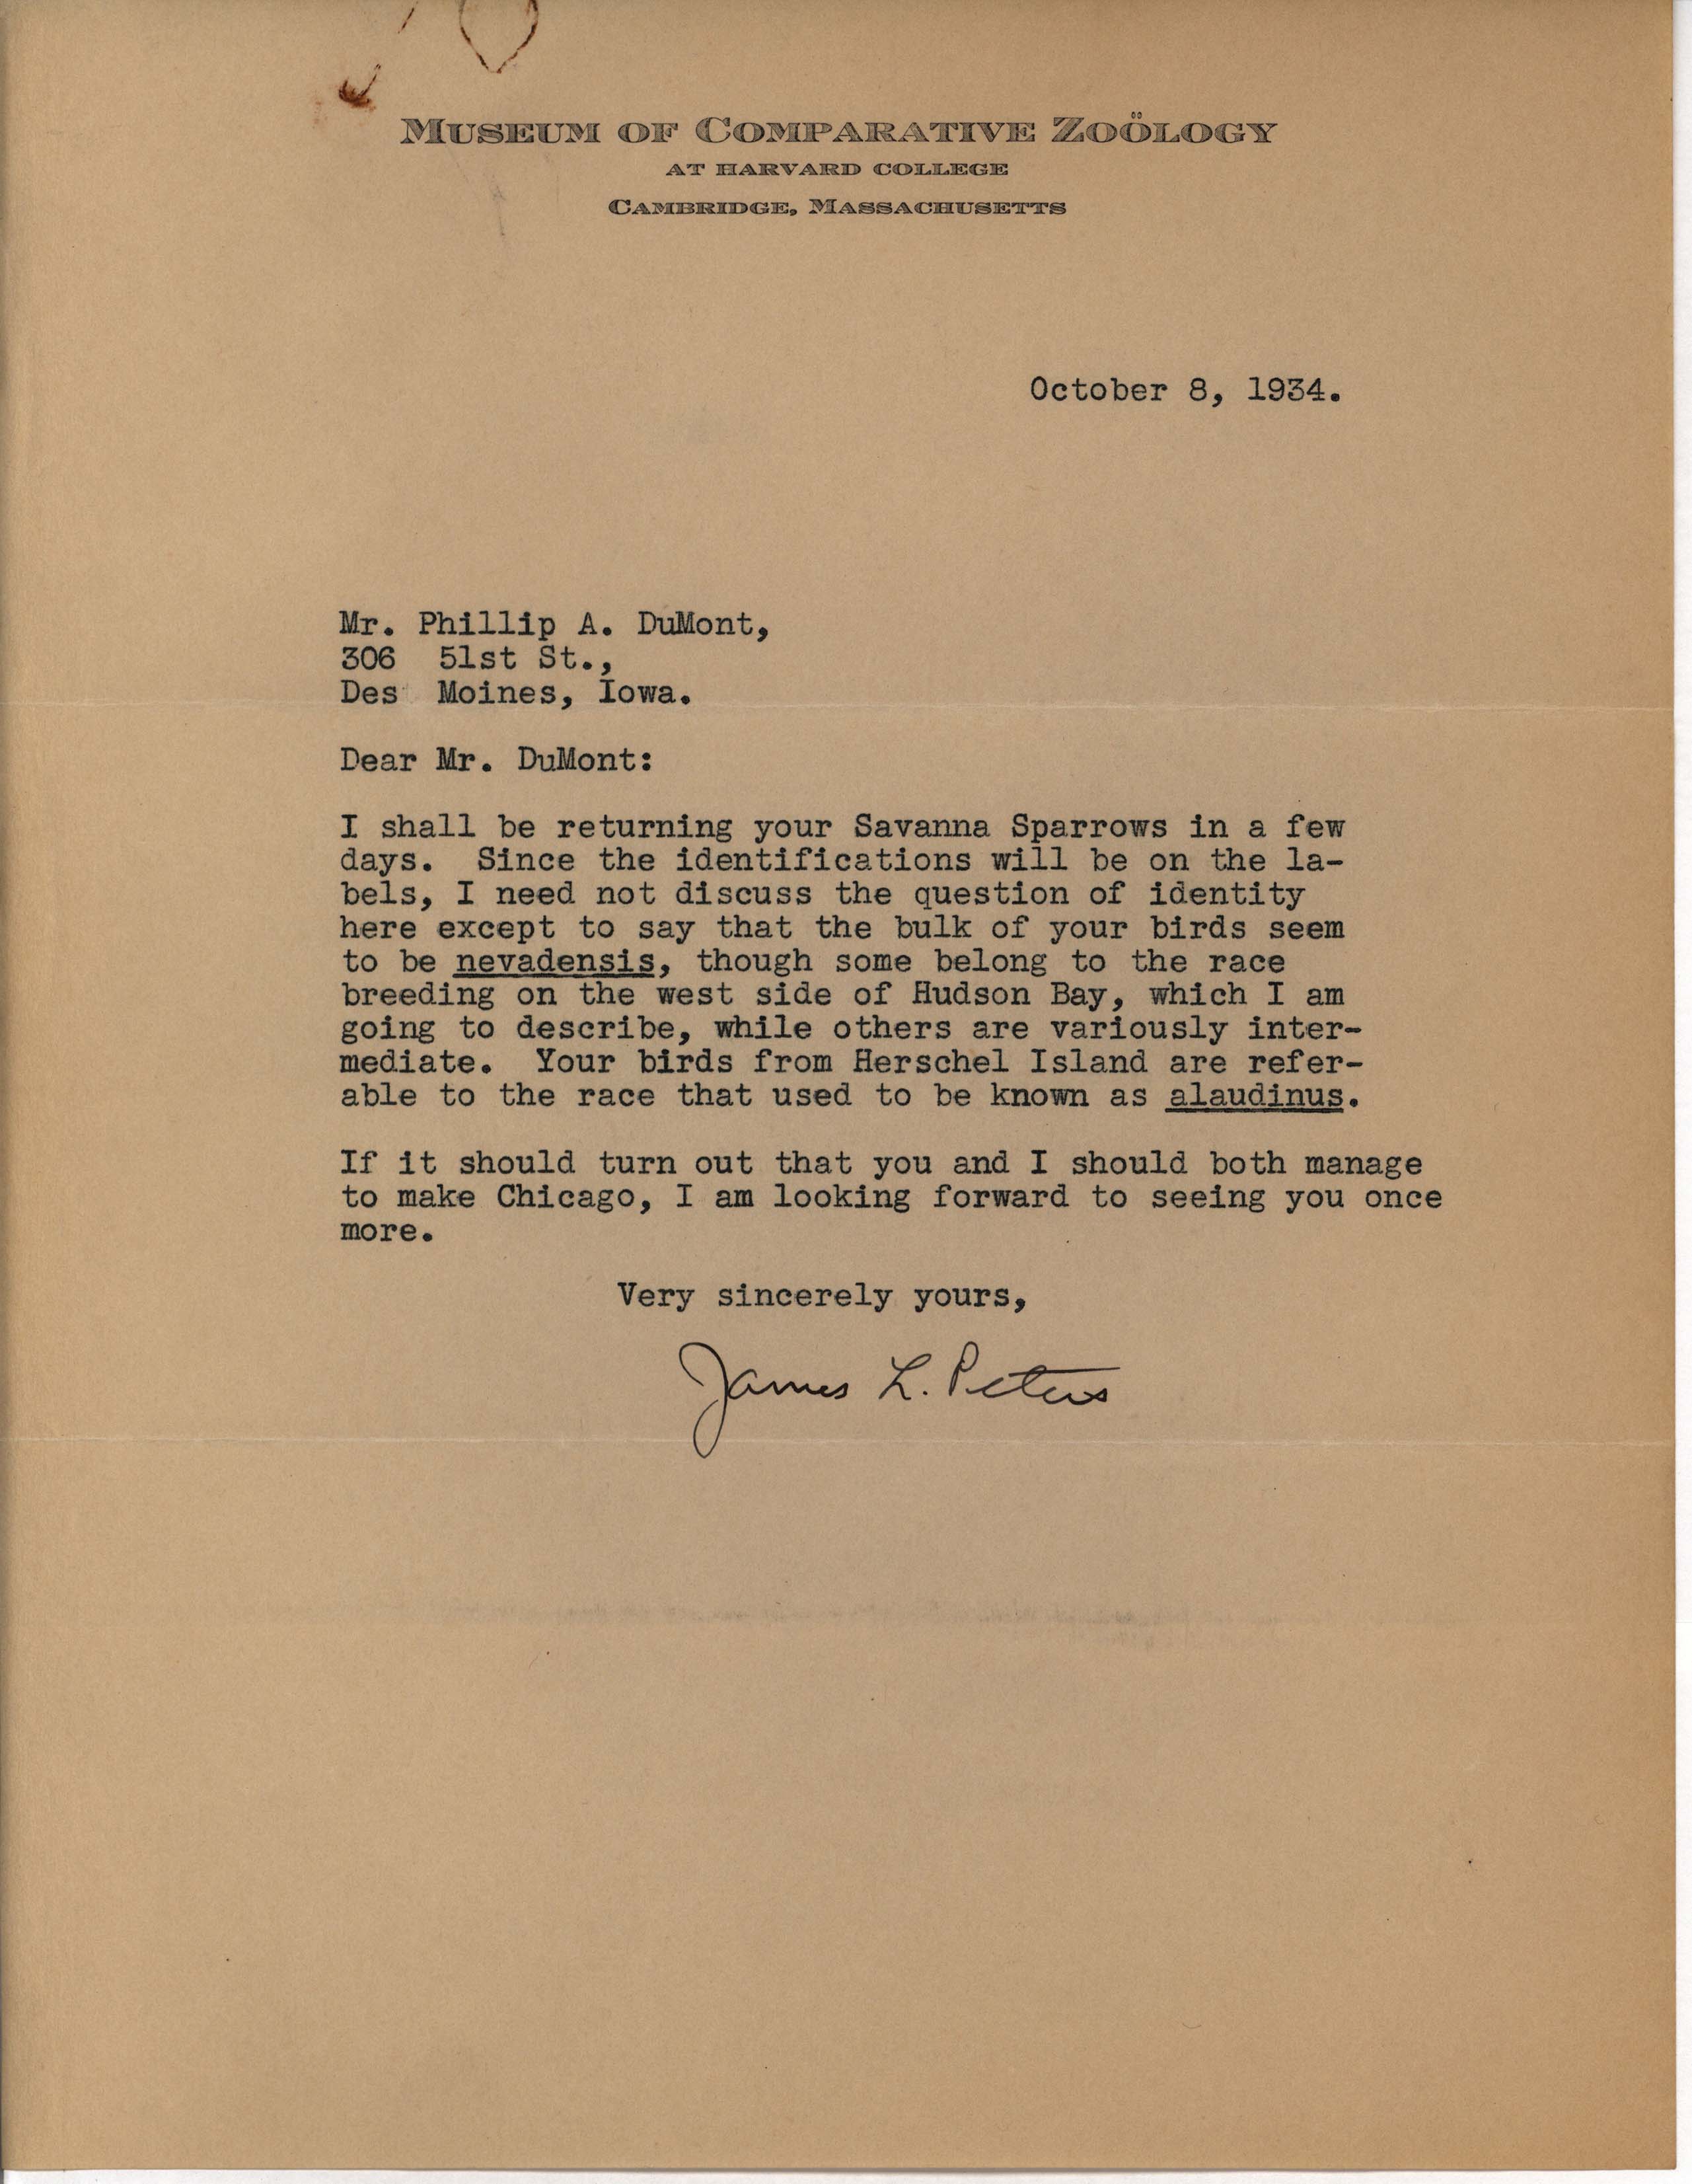 James Peters letter to Philip DuMont regarding Sparrow specimens, October 8, 1934